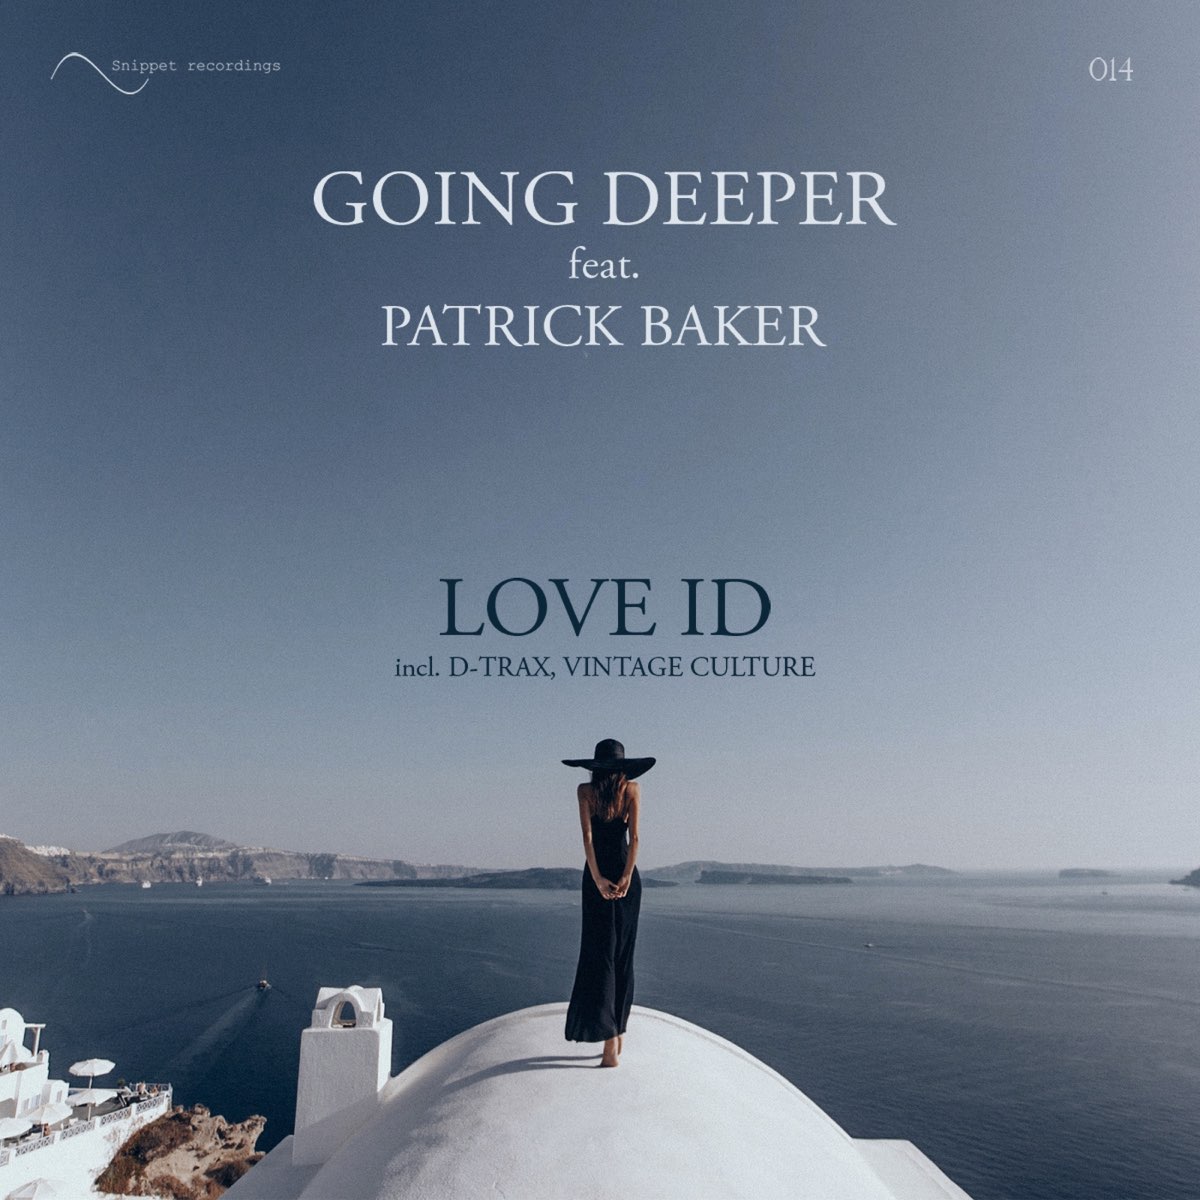 Going Deeper. Love ID going Deeper feat. Patrick Baker. Love ID. Lovely_incl. Feat id